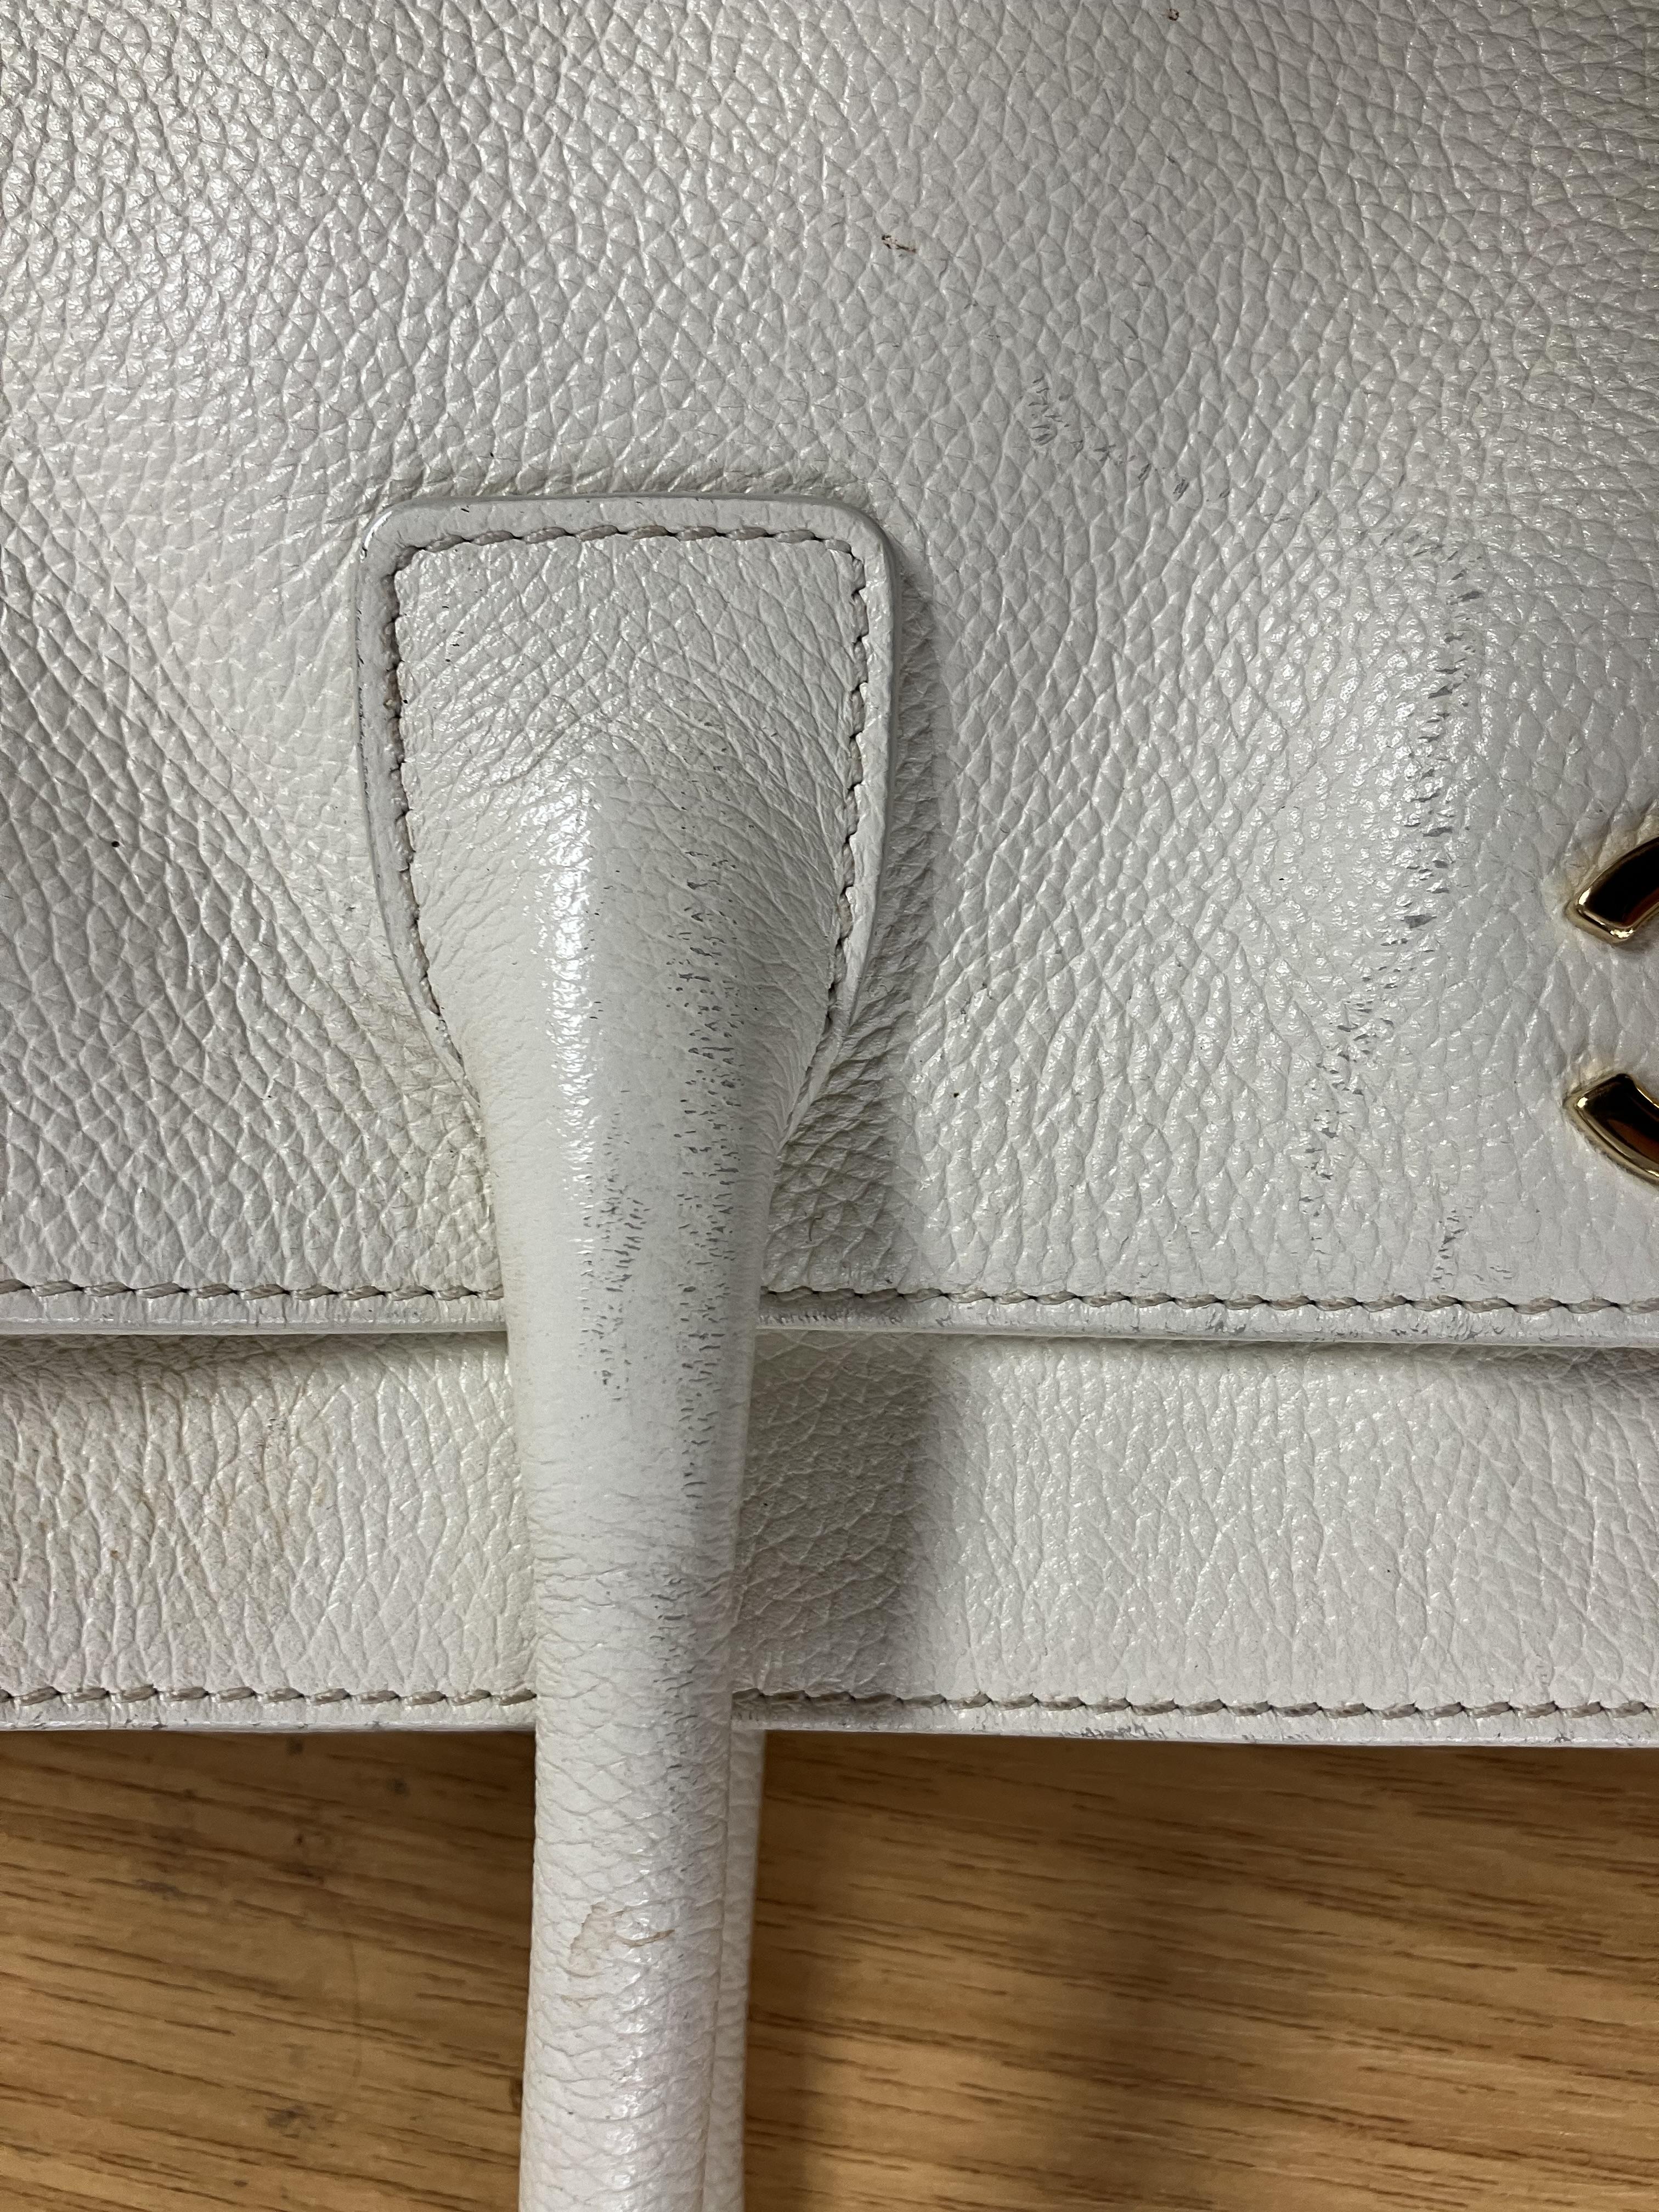 A Chanel Cerf bag in white grain calves - Image 38 of 40